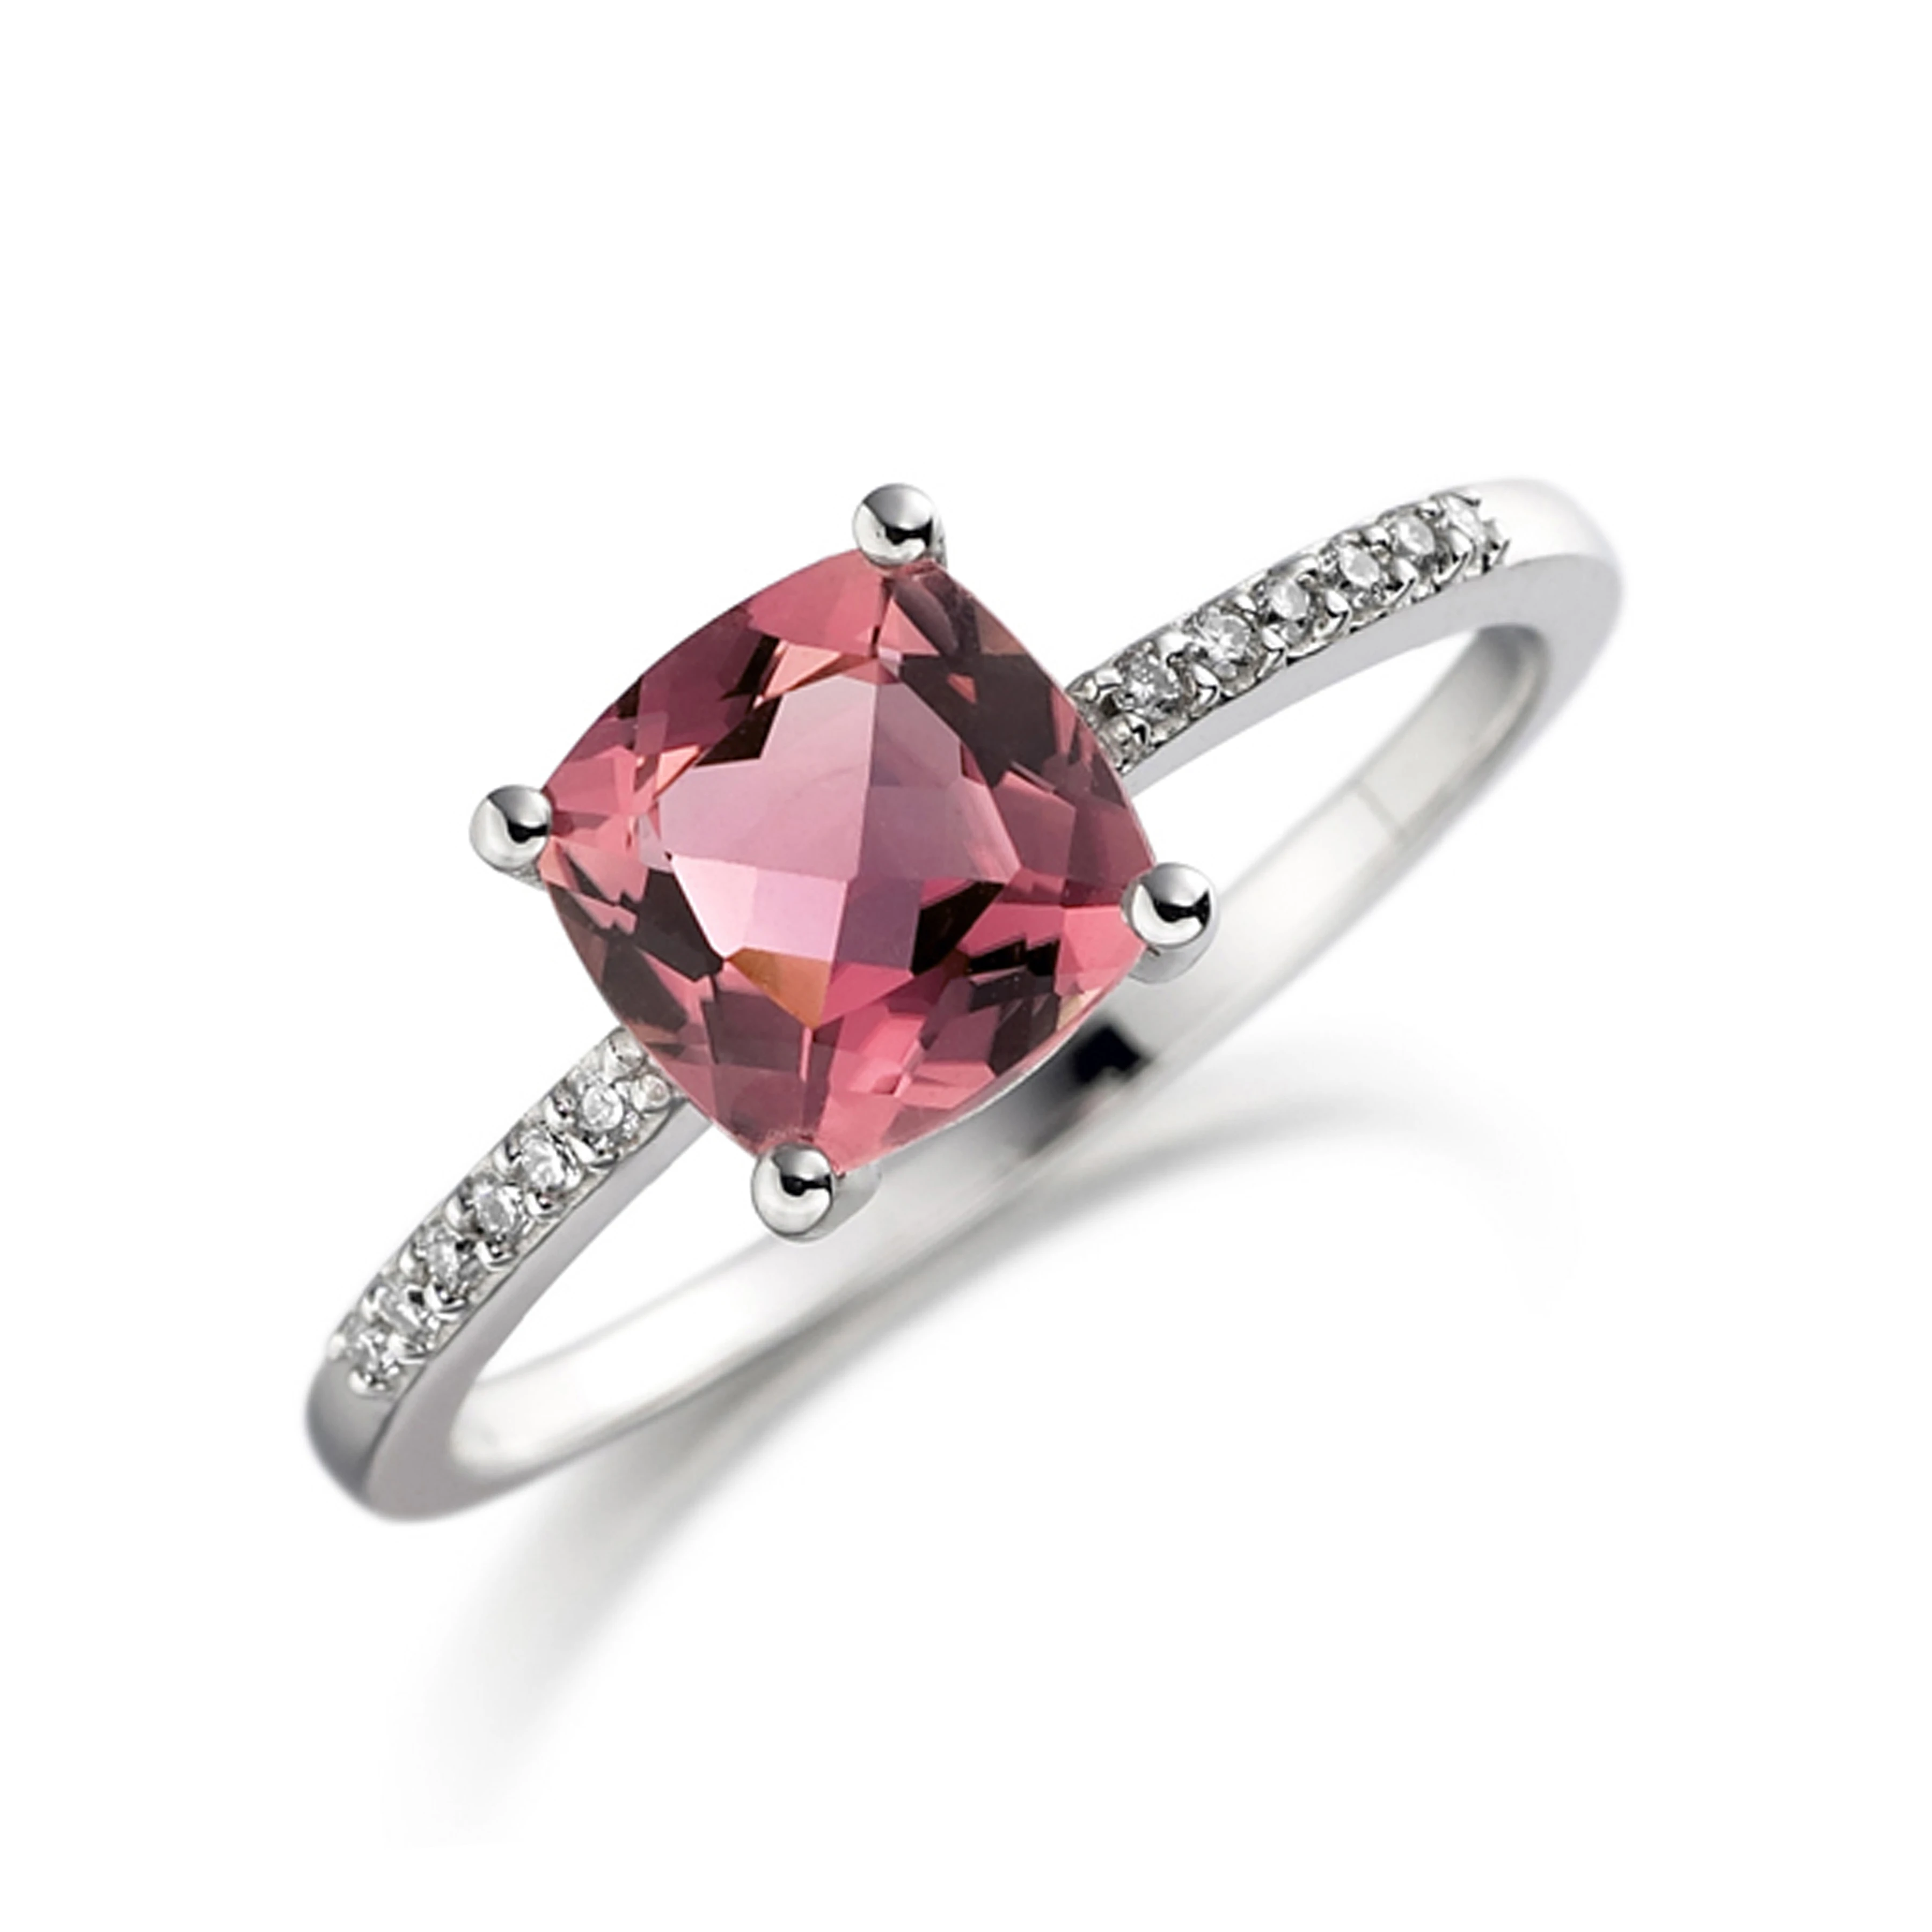 6mm Cushion Sqare Pink Tourmaline Stones On Shoulder Diamond And Gemstone Engagement Ring